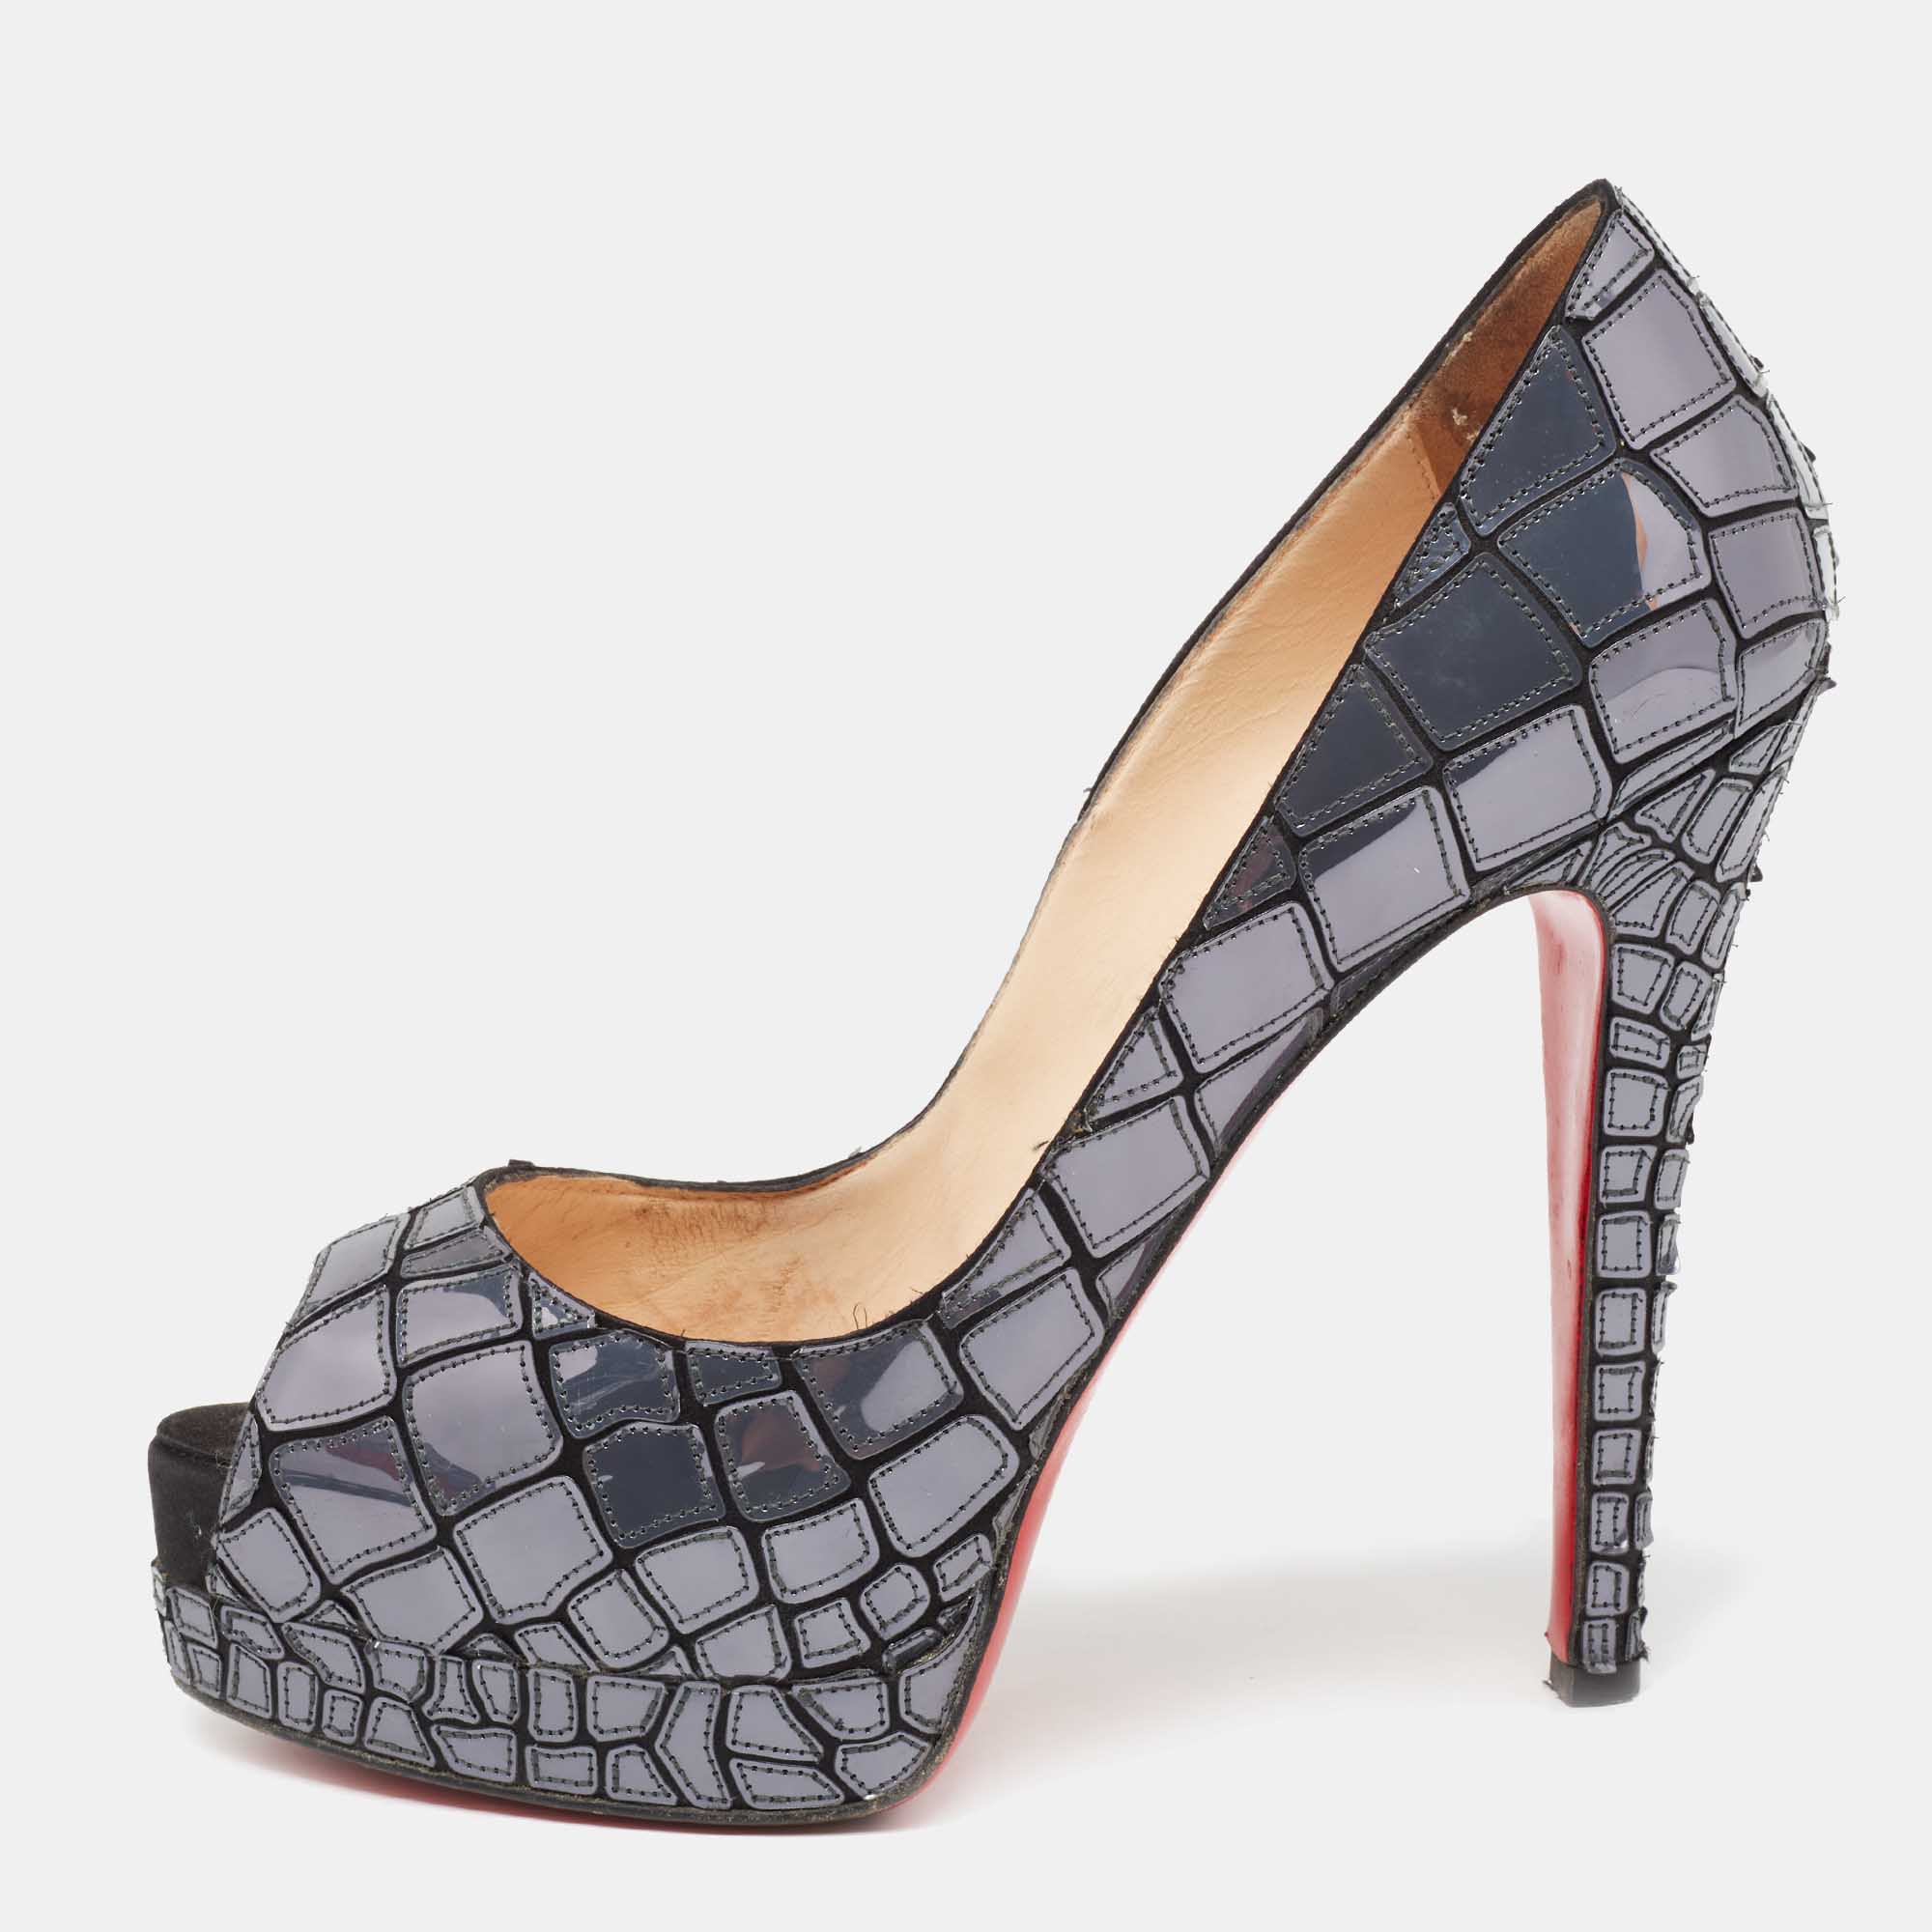 Christian louboutin slate grey/black patent leather and satin mosaic sobek peep-toe platform pumps size 39